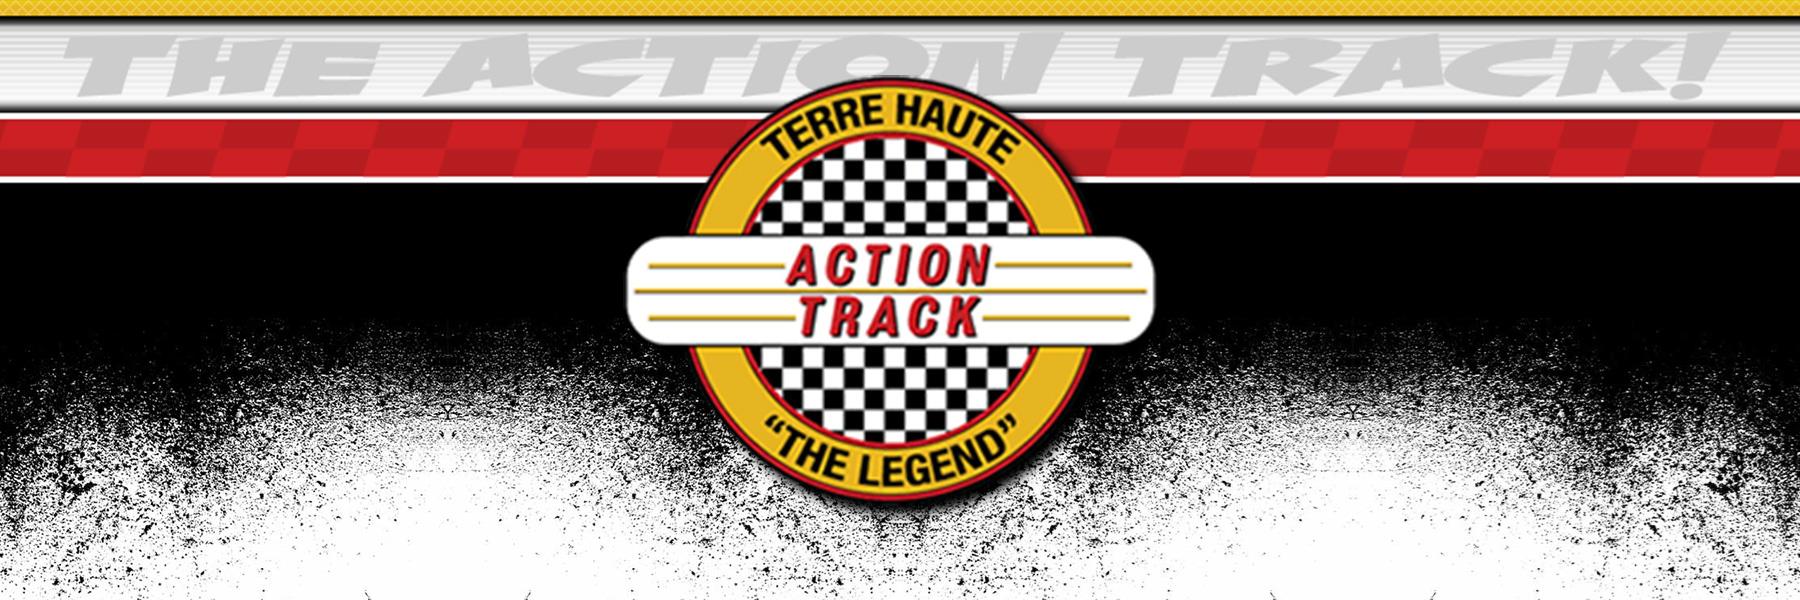 5/28/2021 - Terre Haute Action Track